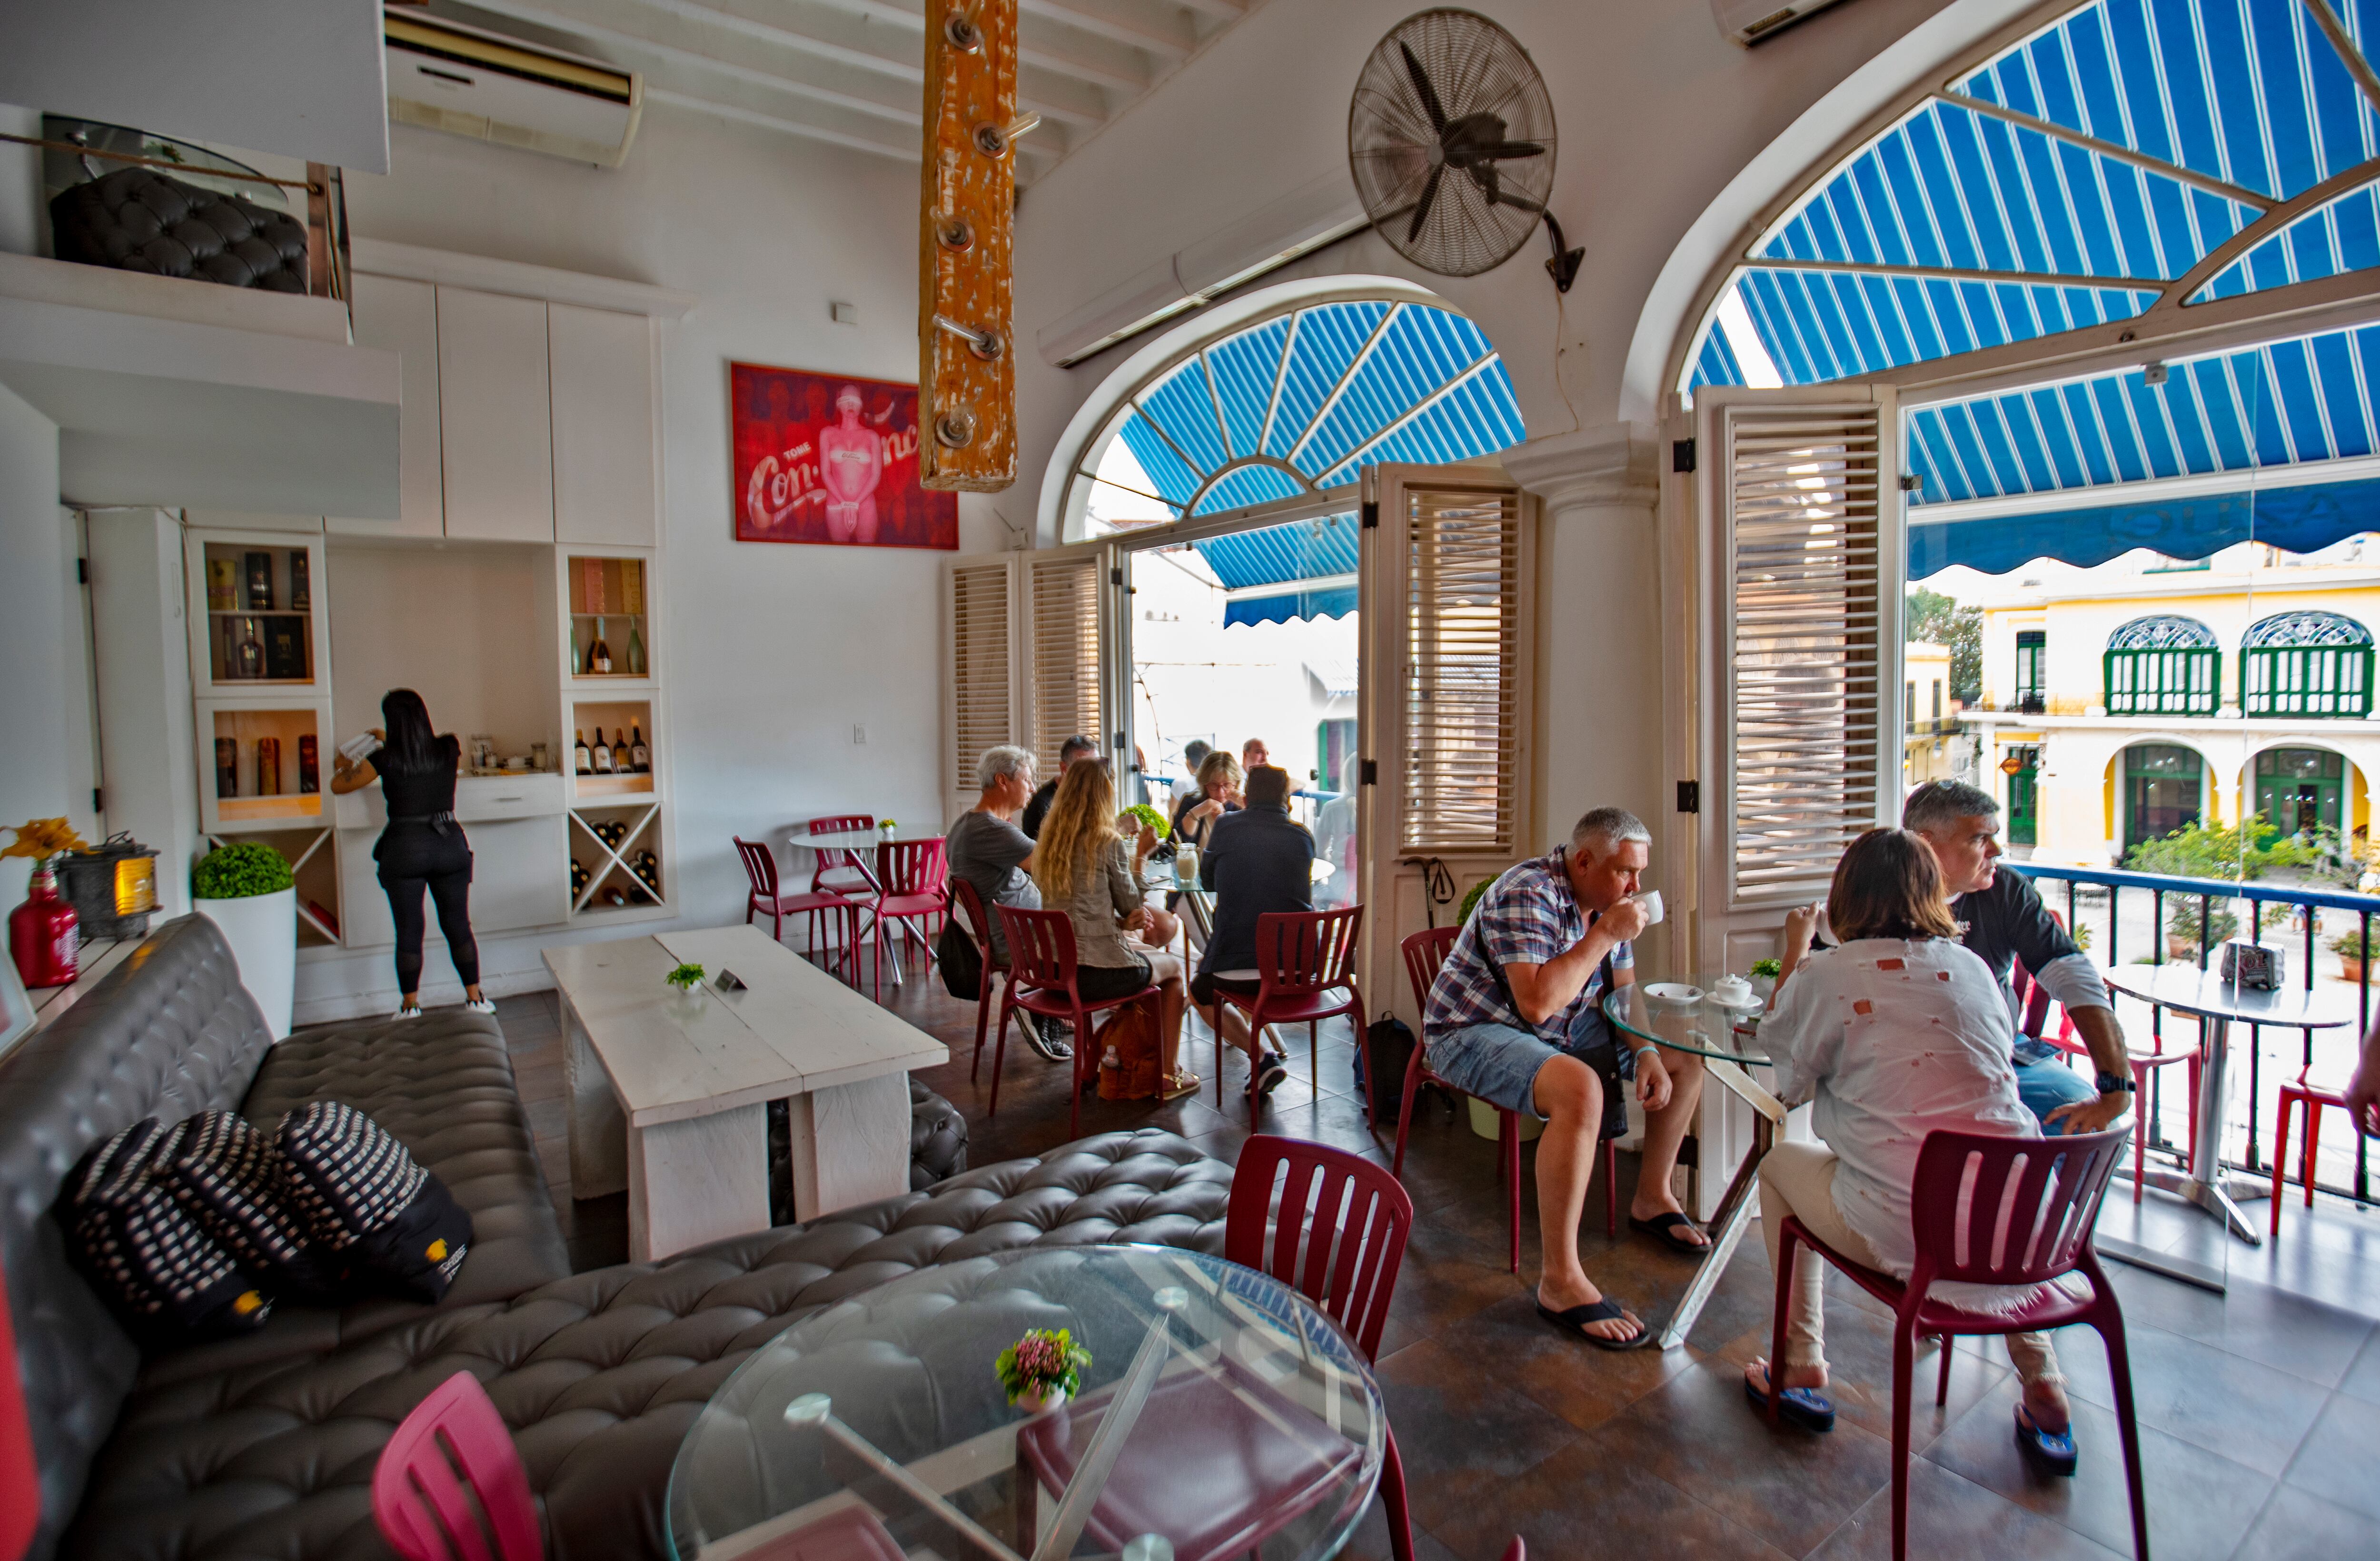 Clients at Café Azúcar, a private business located in Old Havana, Cuba.